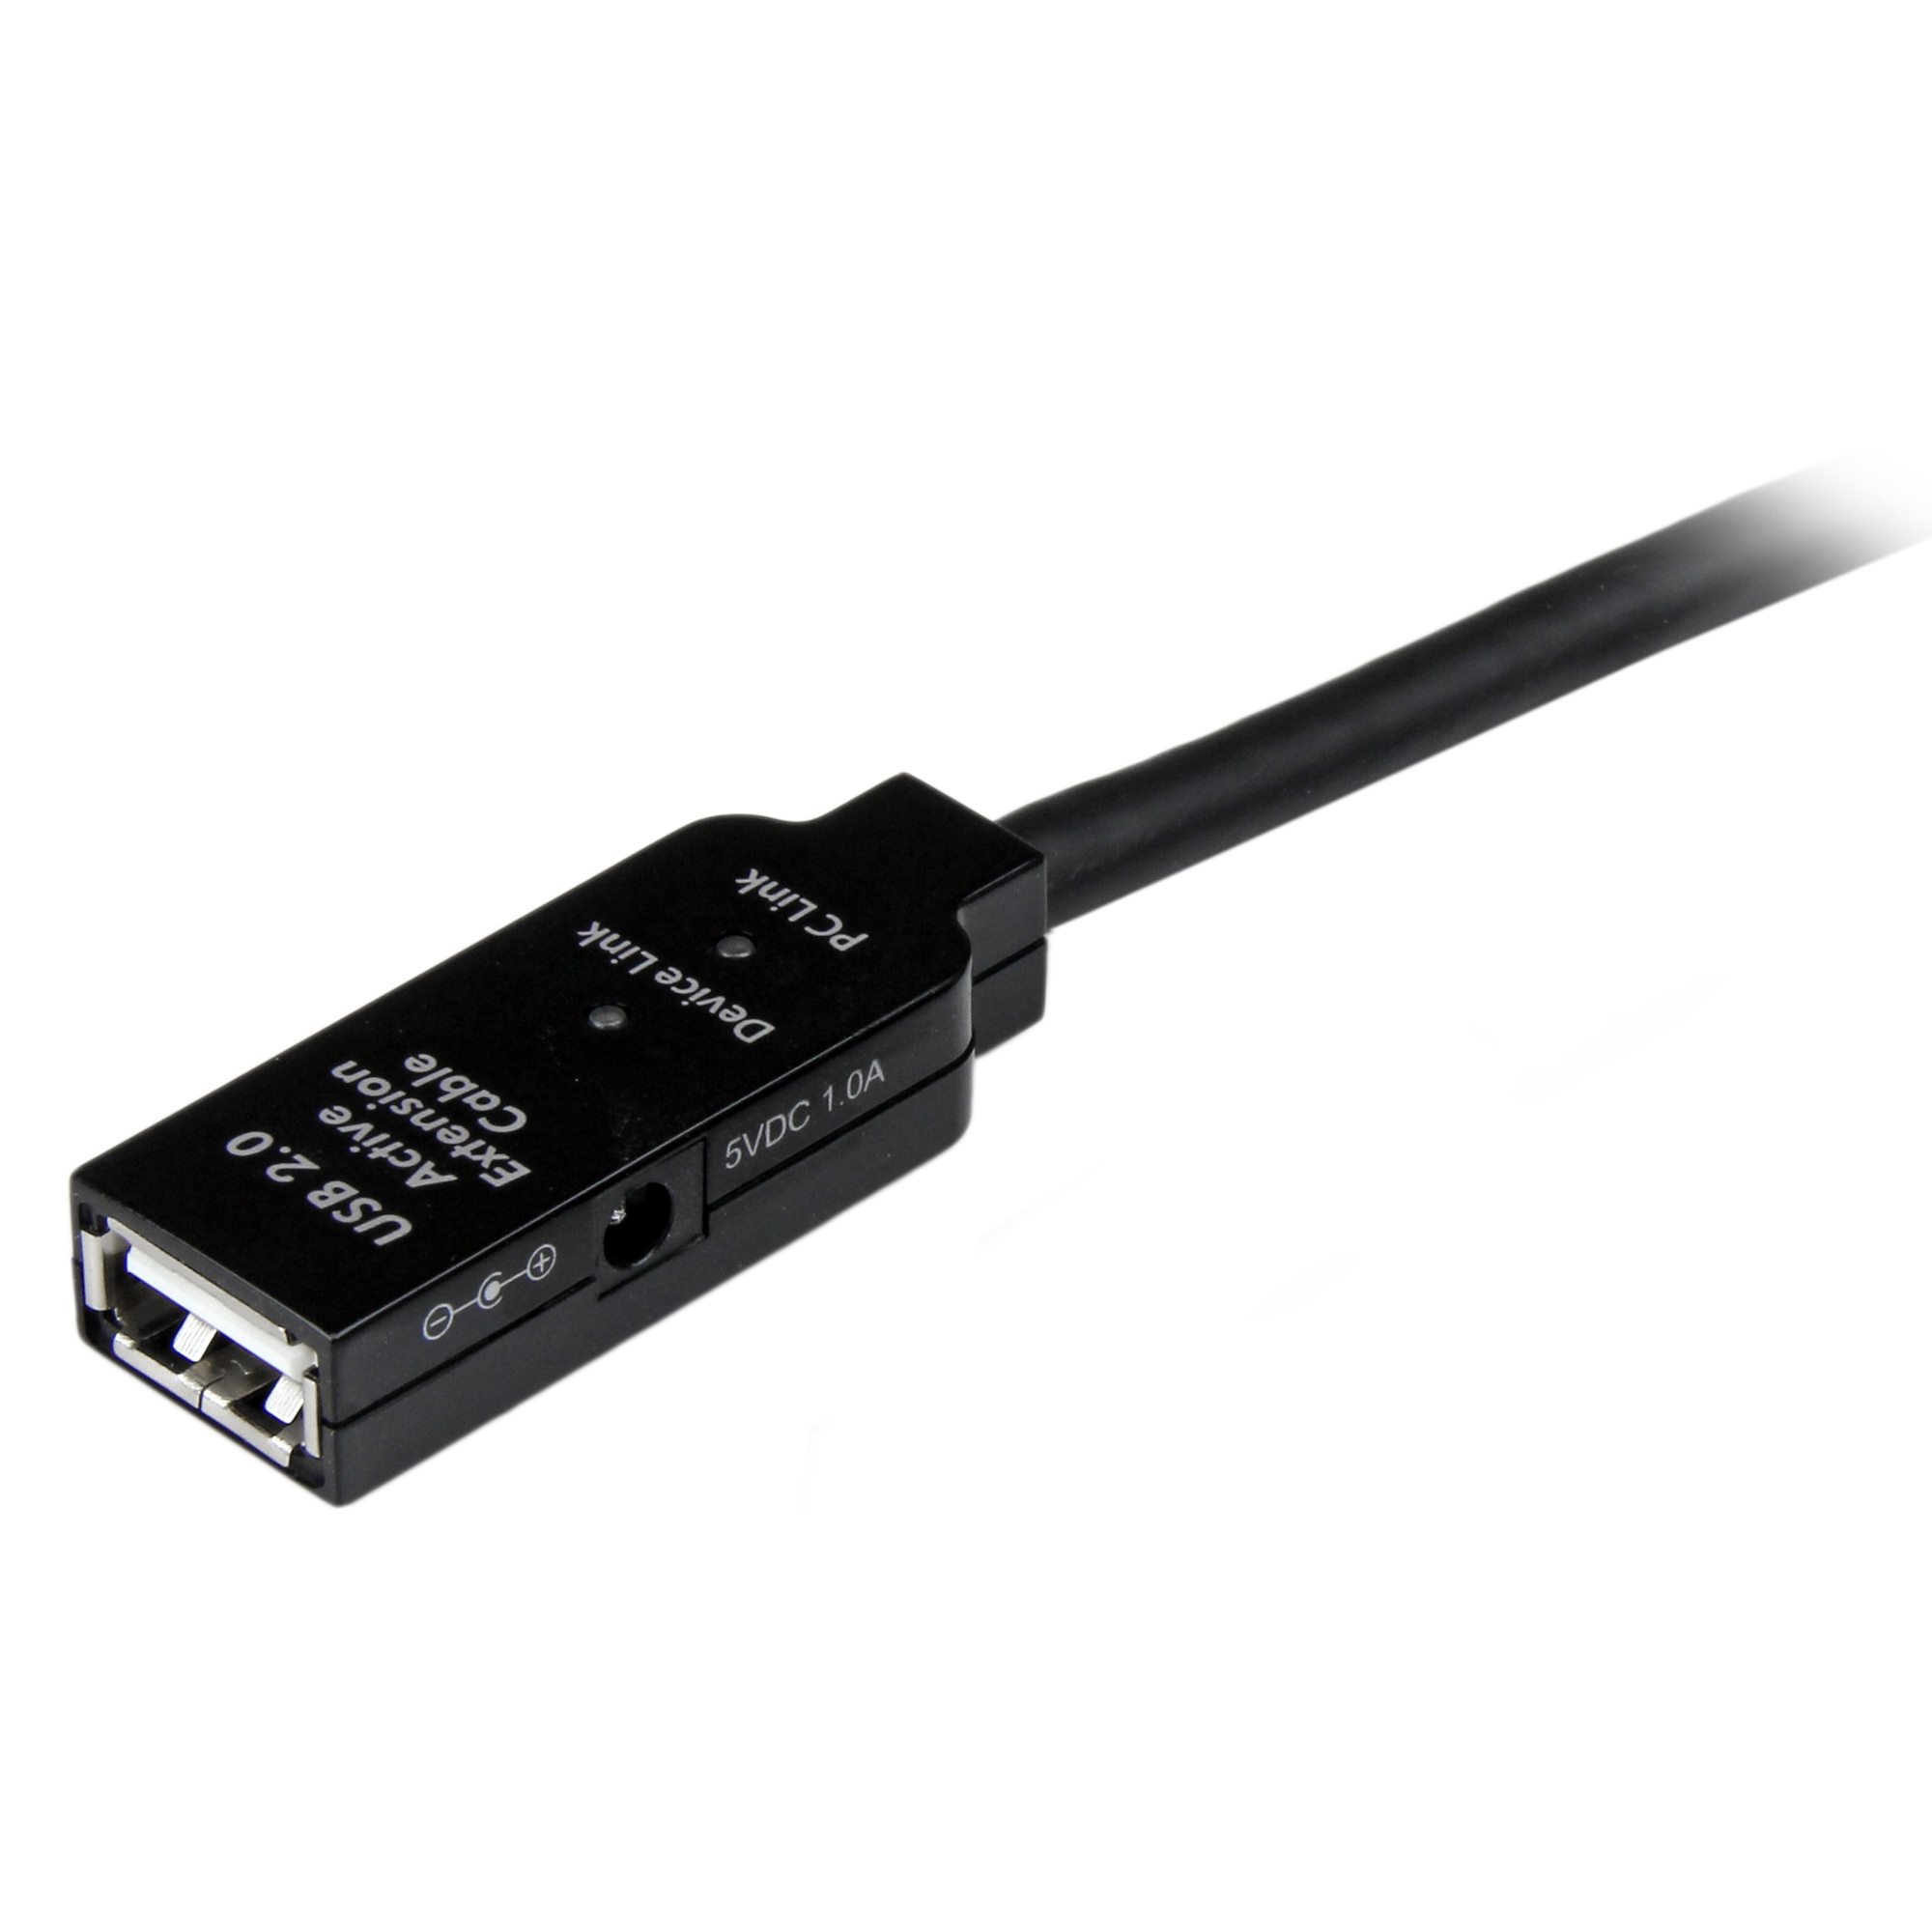 Mouchao Cable de Cable de Adaptador de Conector Macho de extensión USB 2.0 Macho a Macho Negro 